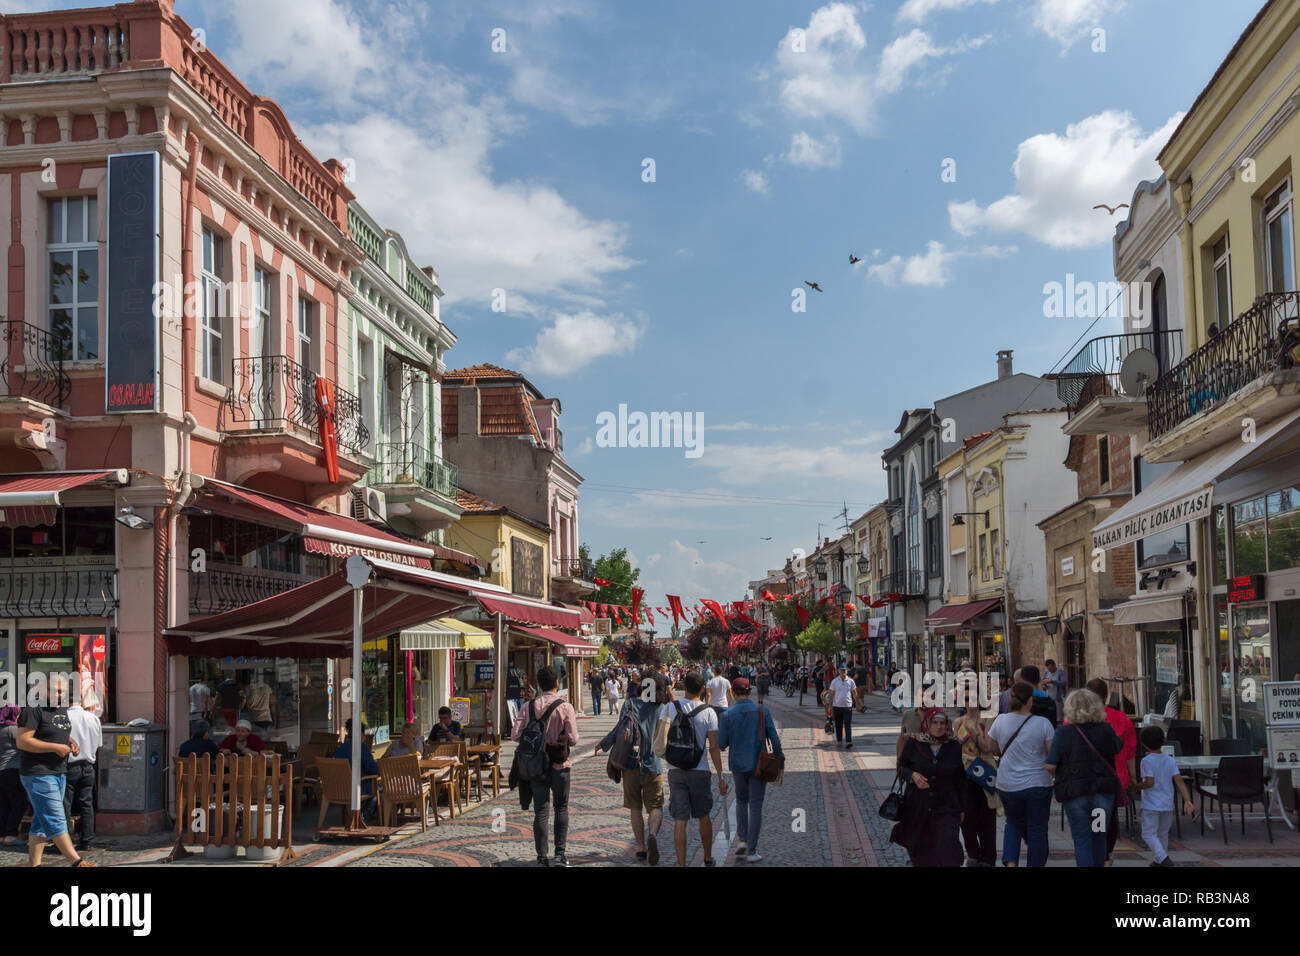 EDIRNE, TURKEY - MAY 26, 2018: Shopping pedestrian street in the ...